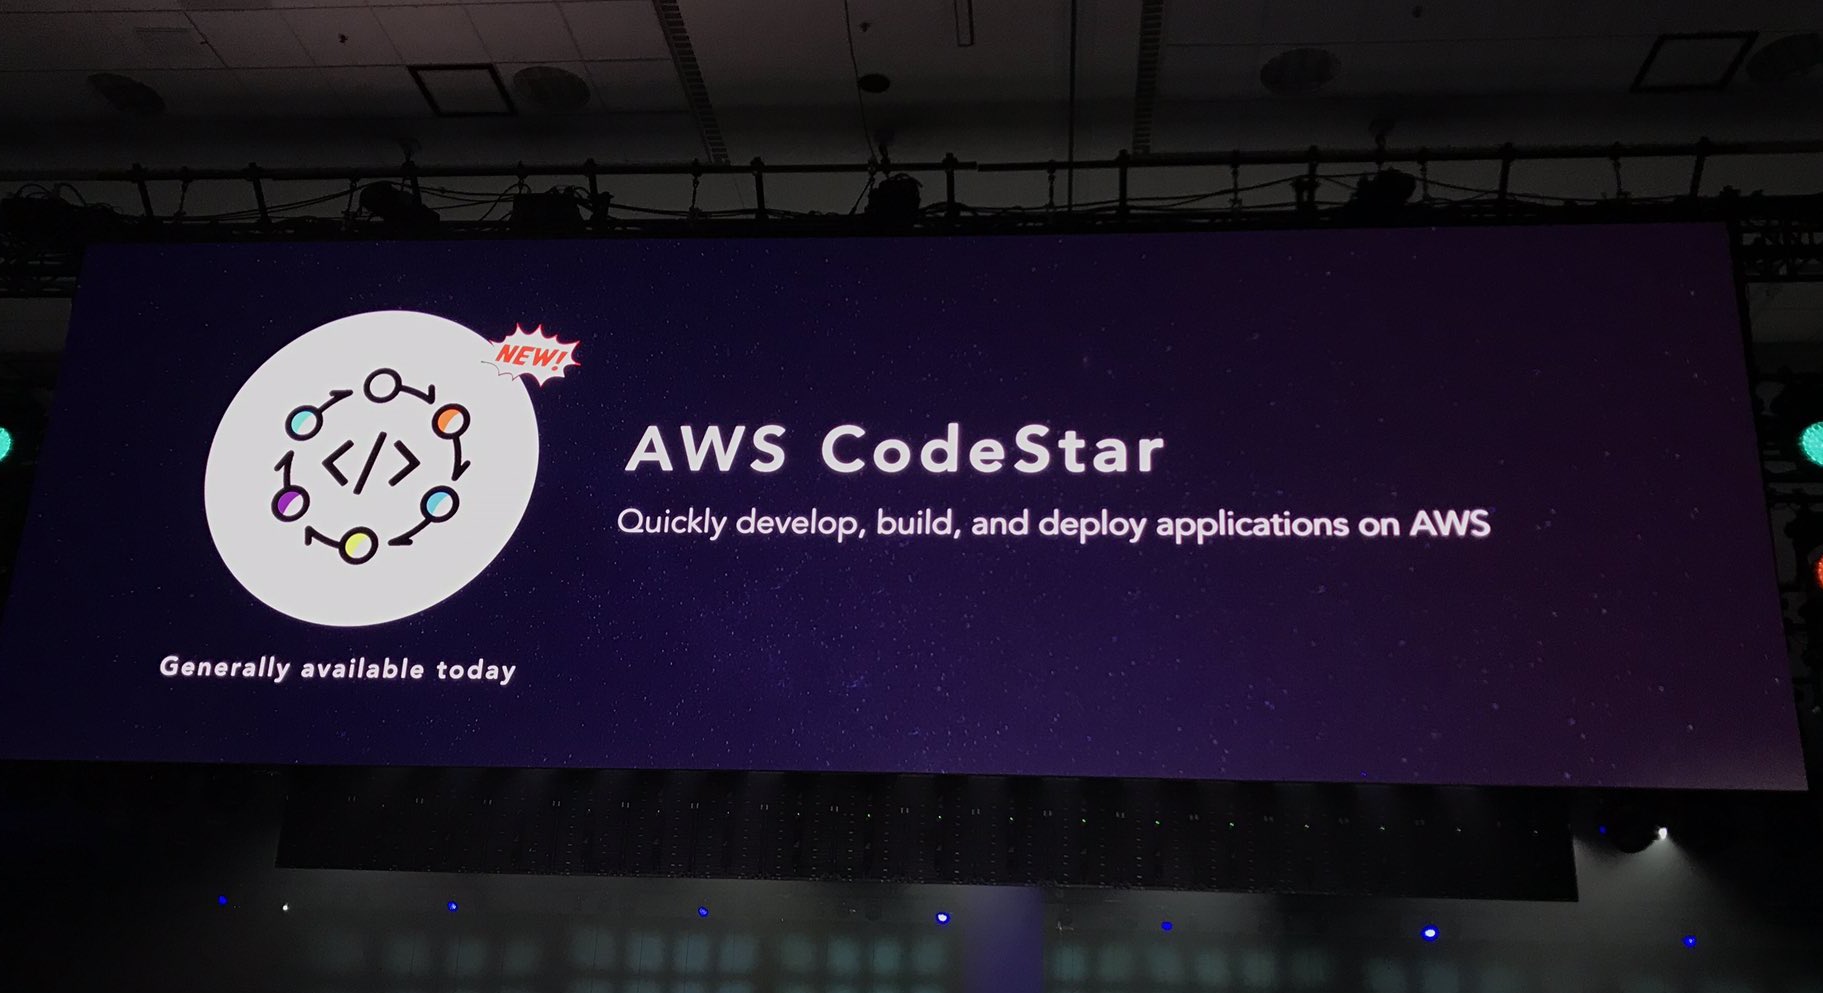 AWS CodeStar